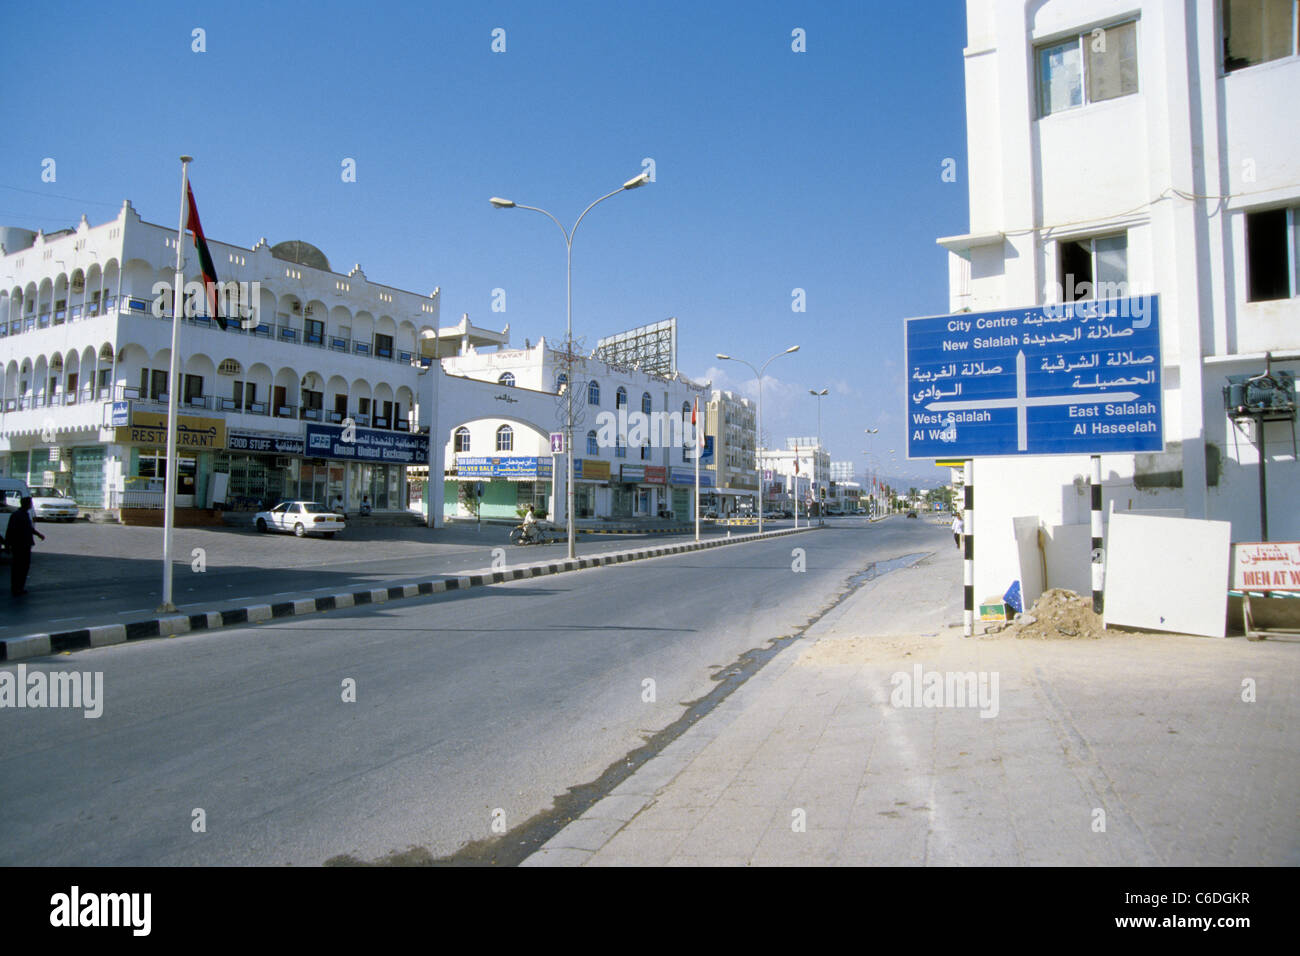 Strasse und Wegweiser in Salalah, Oman, Street in the town of Salalah, Sultanate of Oman Stock Photo